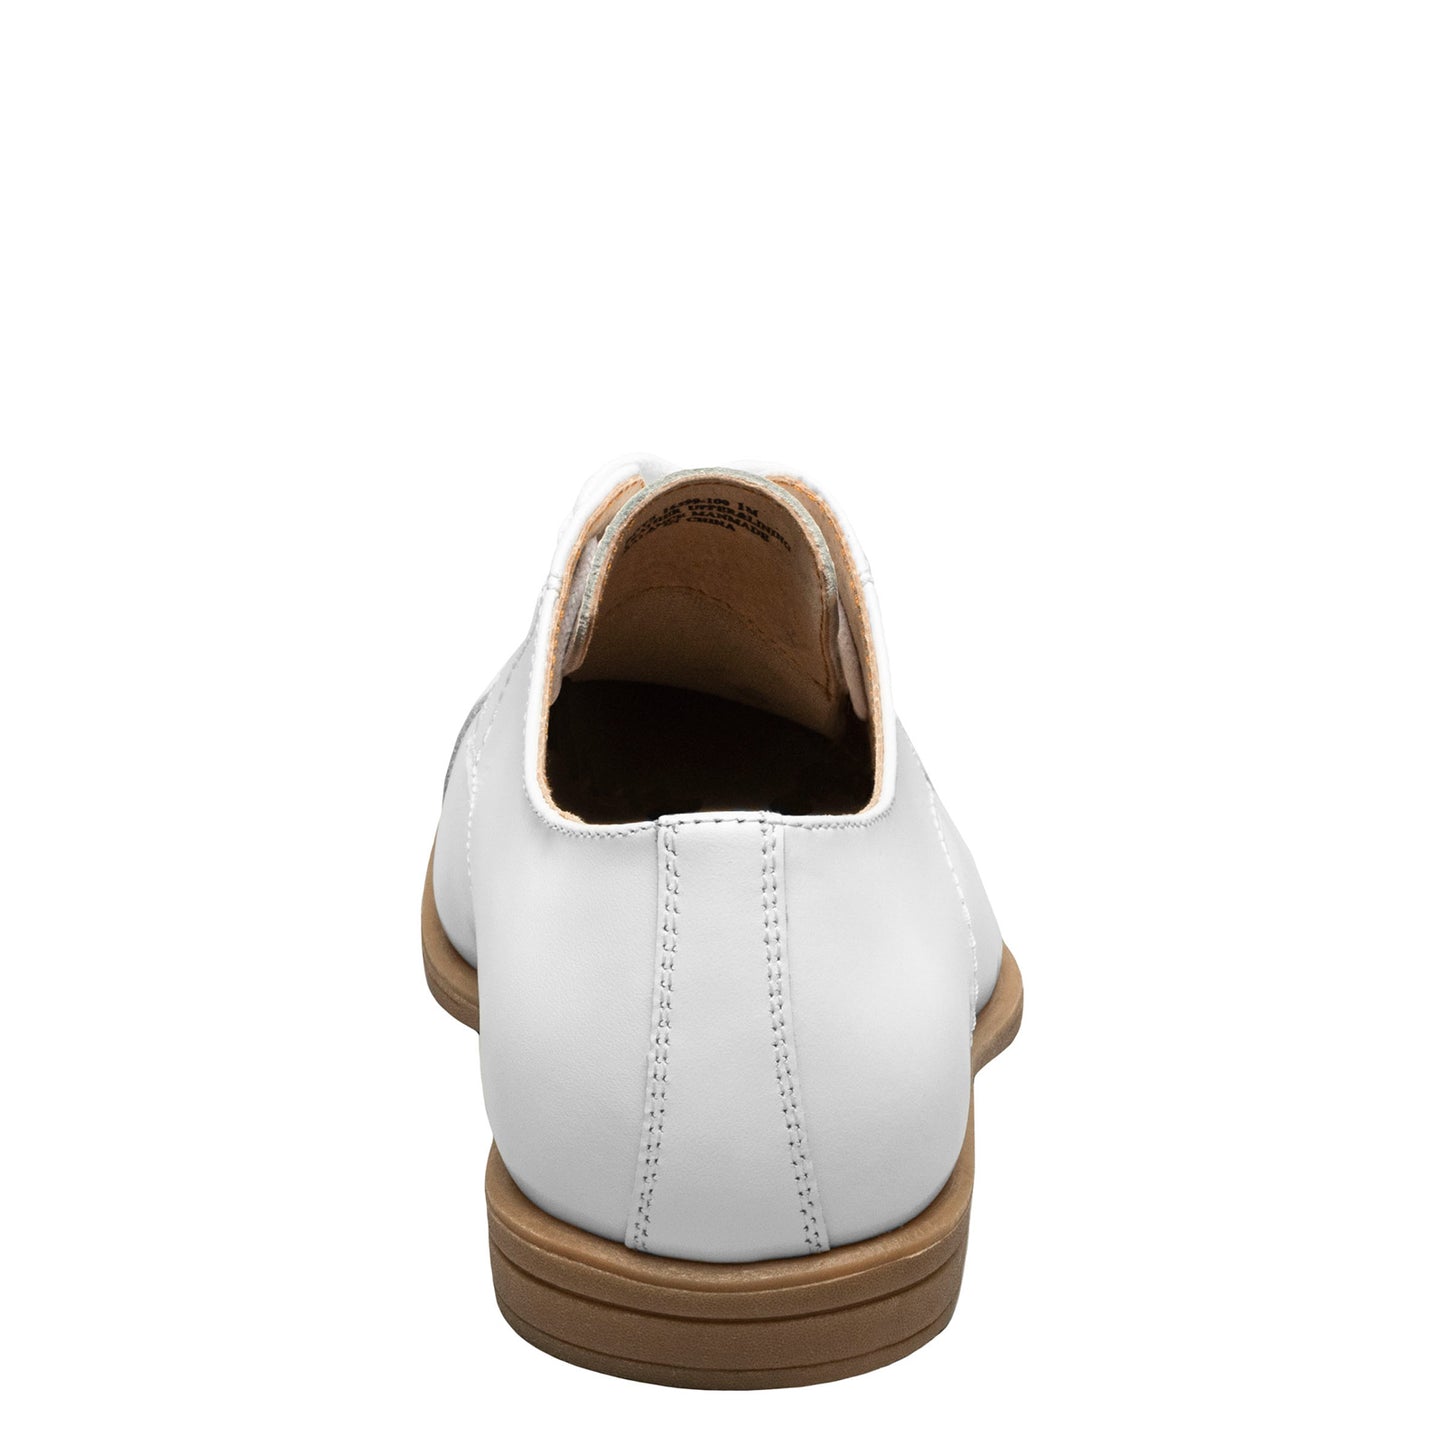 Peltz Shoes  Boy's Florsheim Reveal Cap Toe Oxford JR – Little Kid & Big Kid White 16599-100